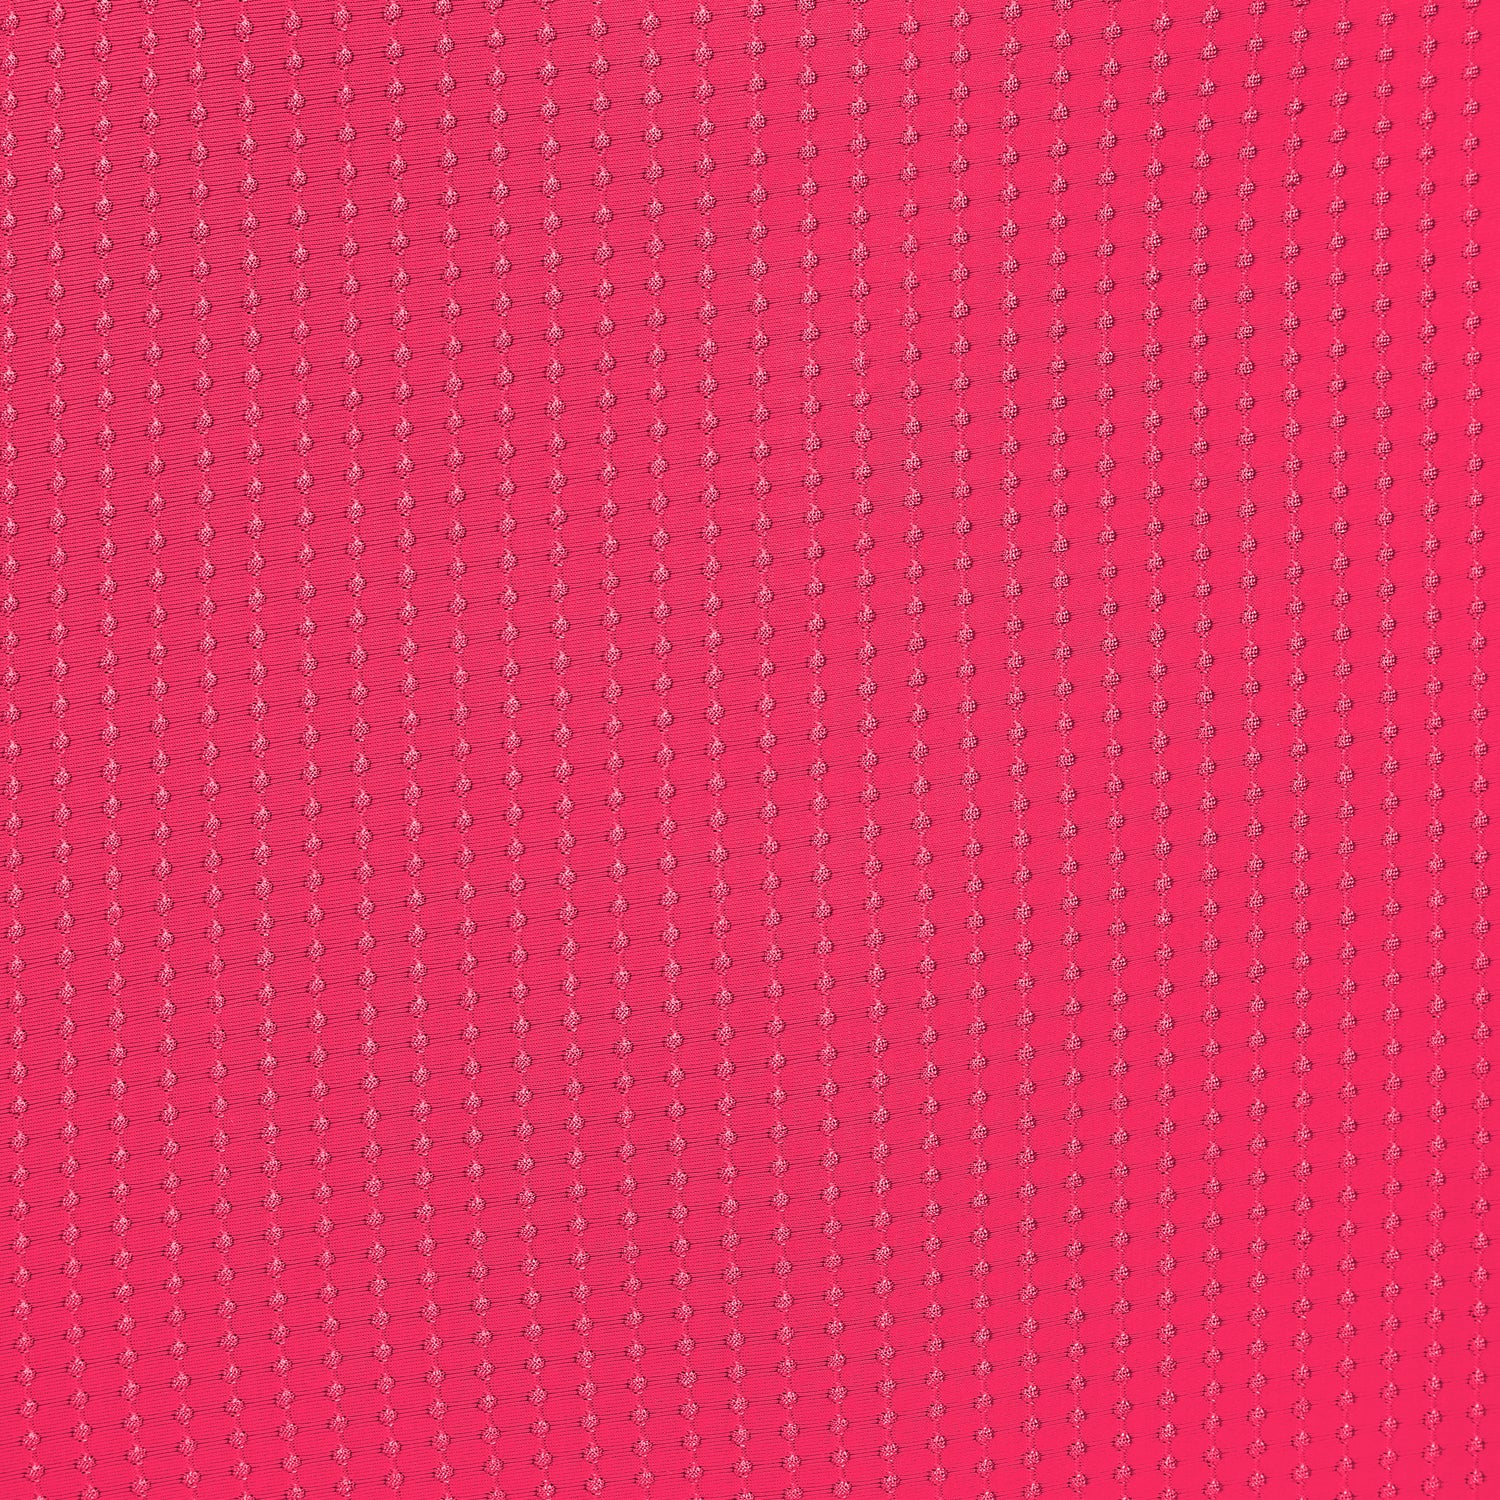 Set Dots-Virtual-Pink Frufru